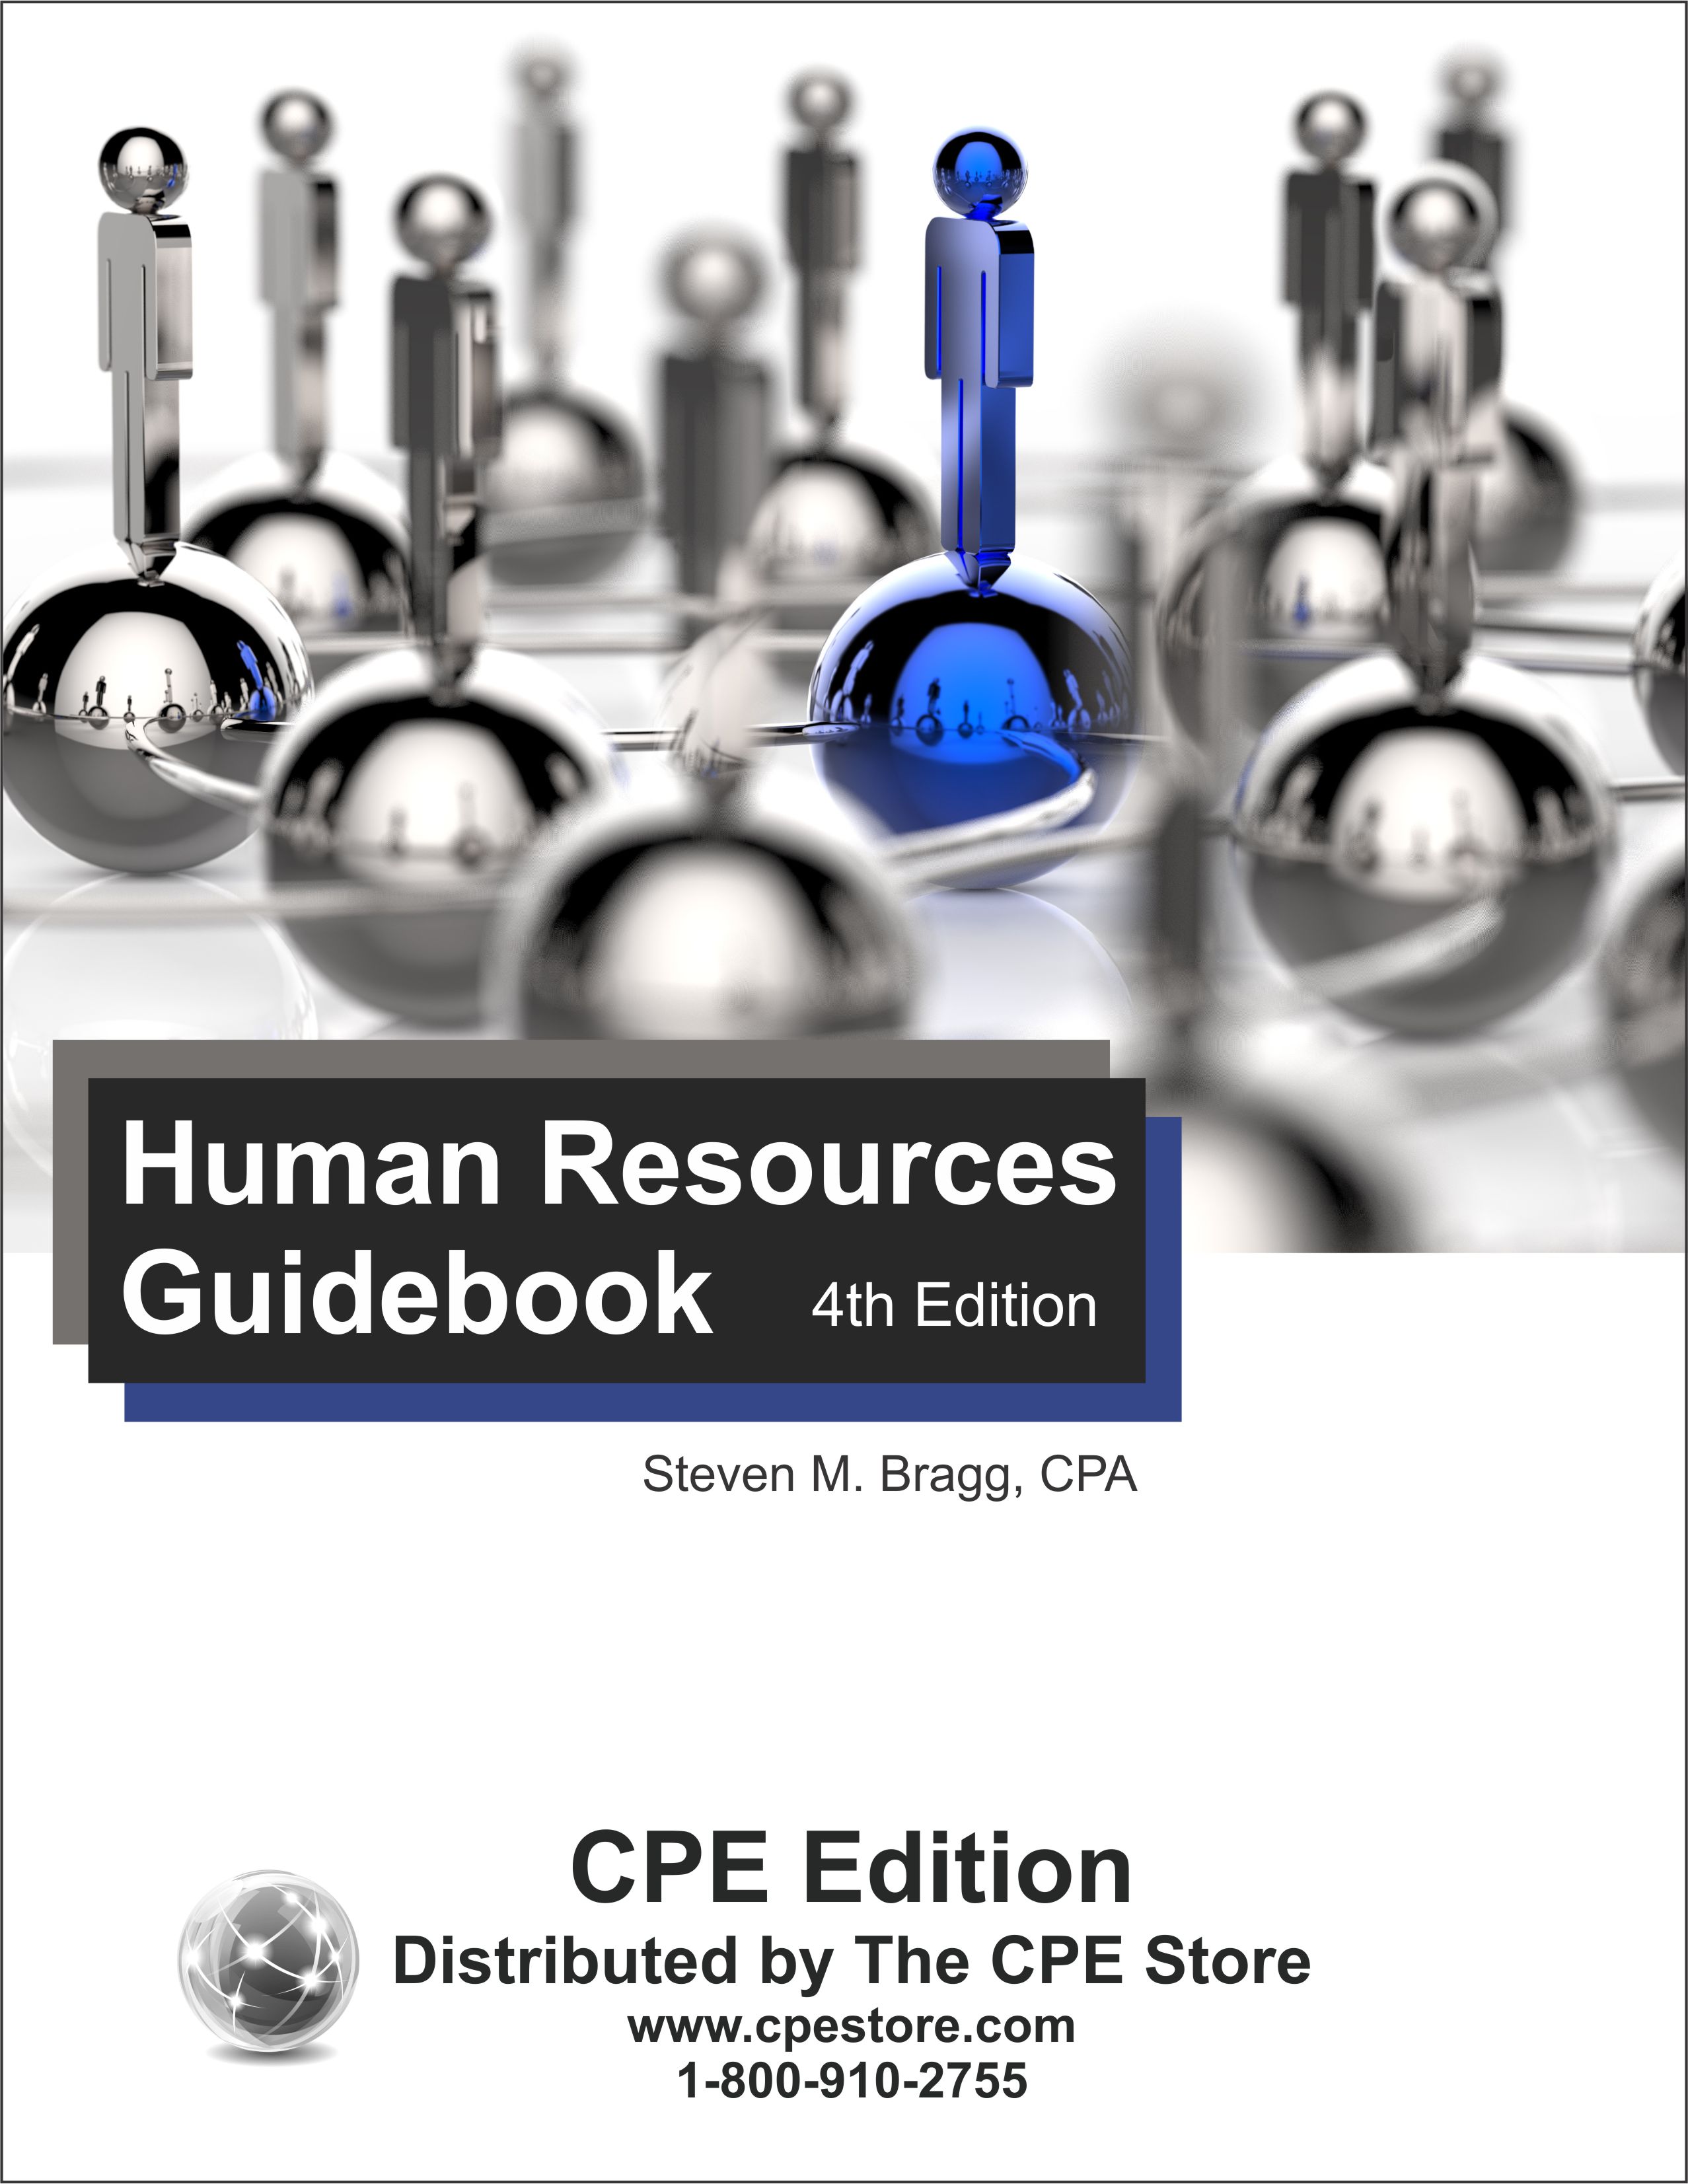 Human Resources Guidebook